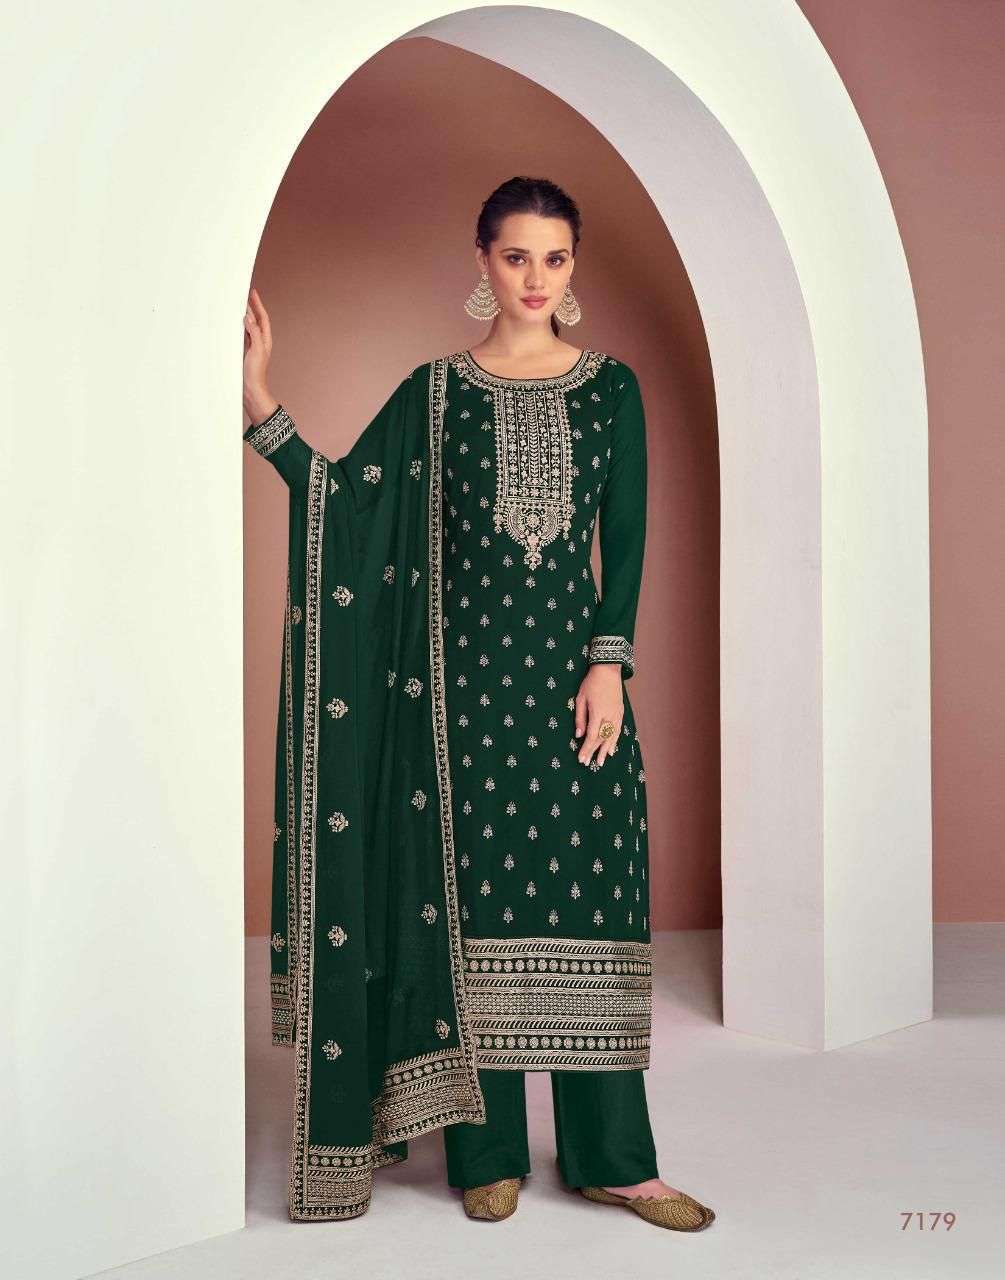 Dimple By Gulkayra Designer Wholesale Online Salwar Suit Set